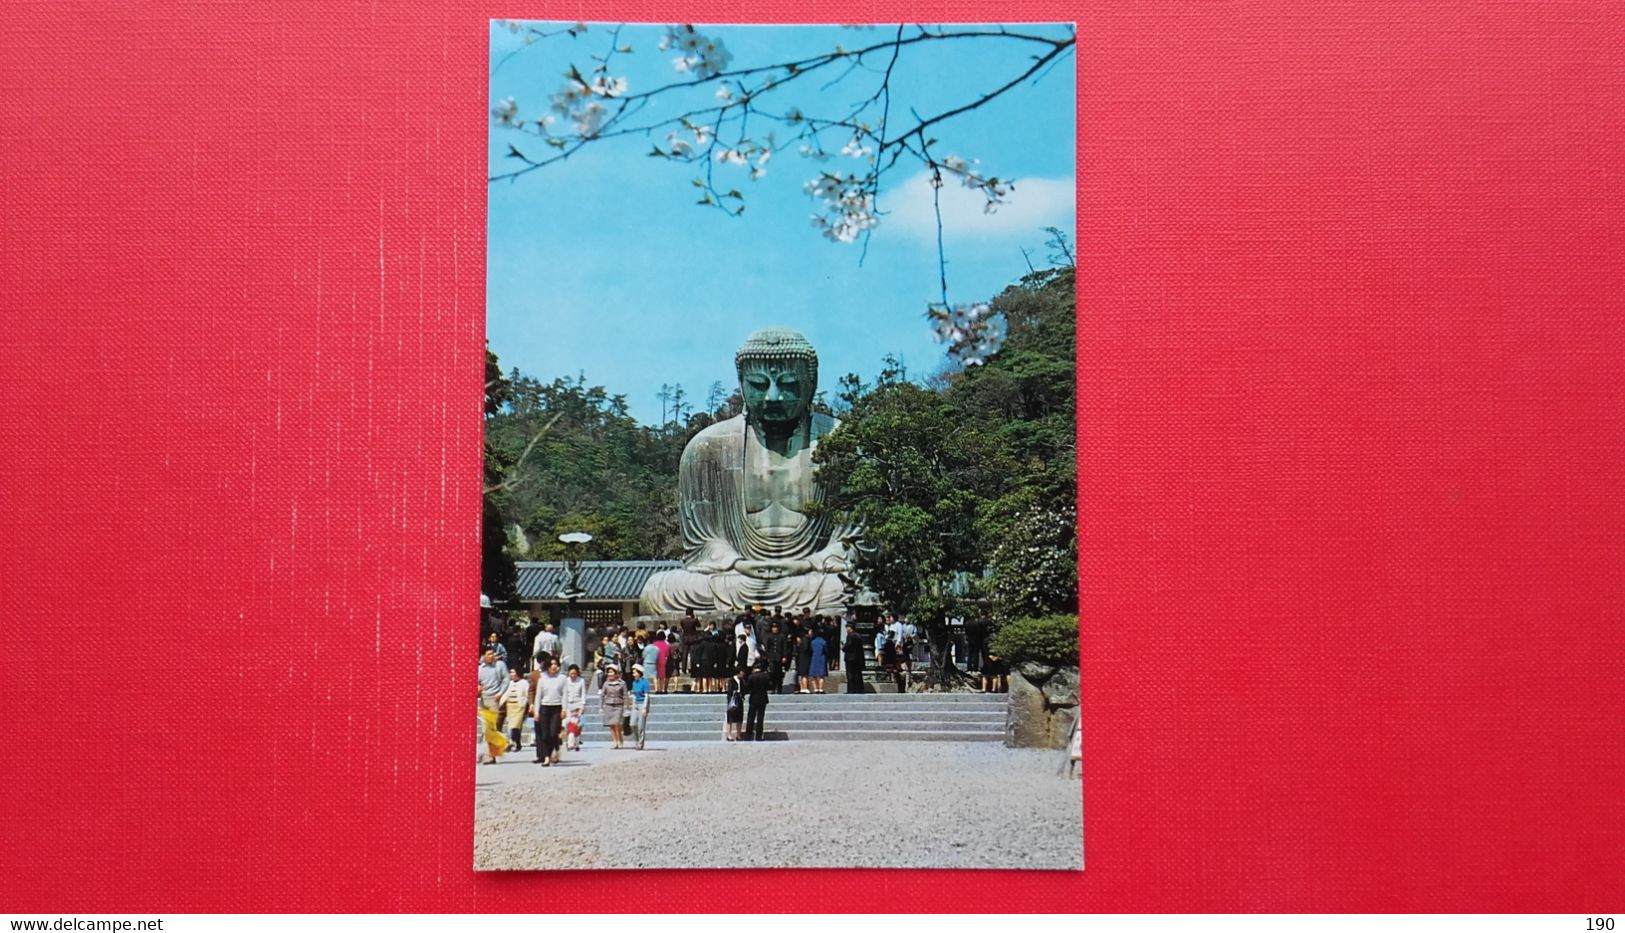 The Budda Of Kamakura - Buddhism